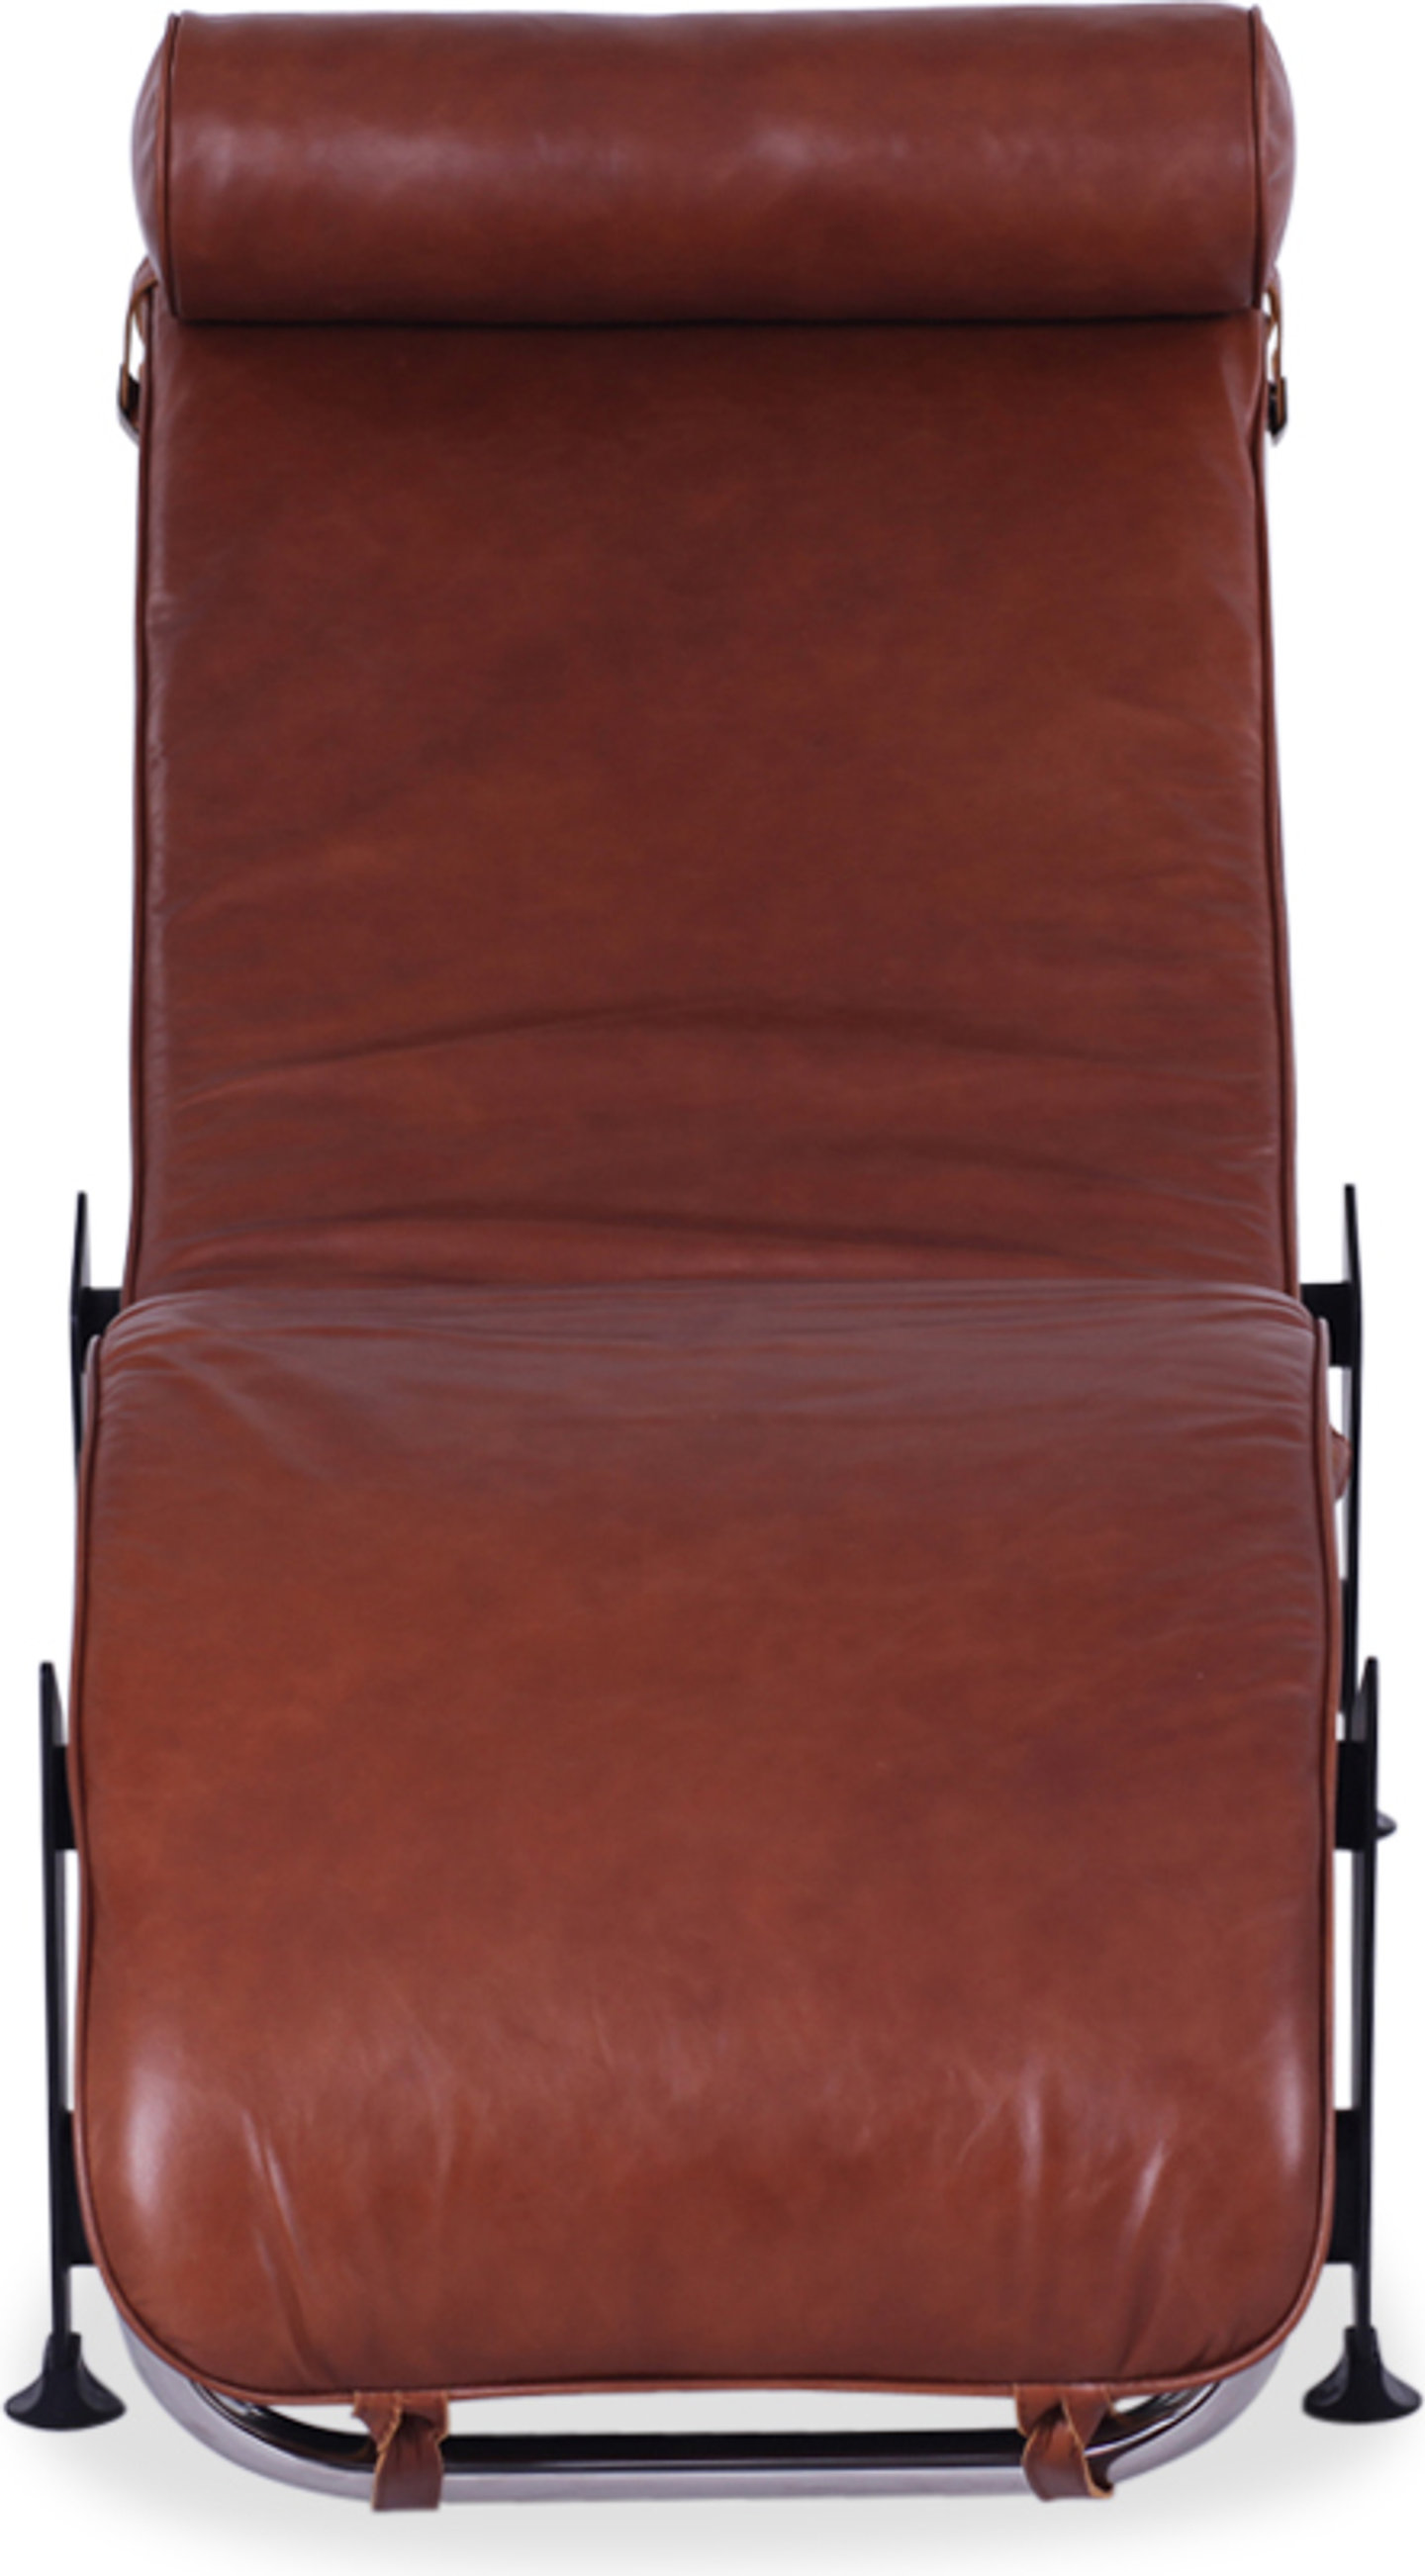 Chaise longue stile LC4 Premium Leather/Tan image.